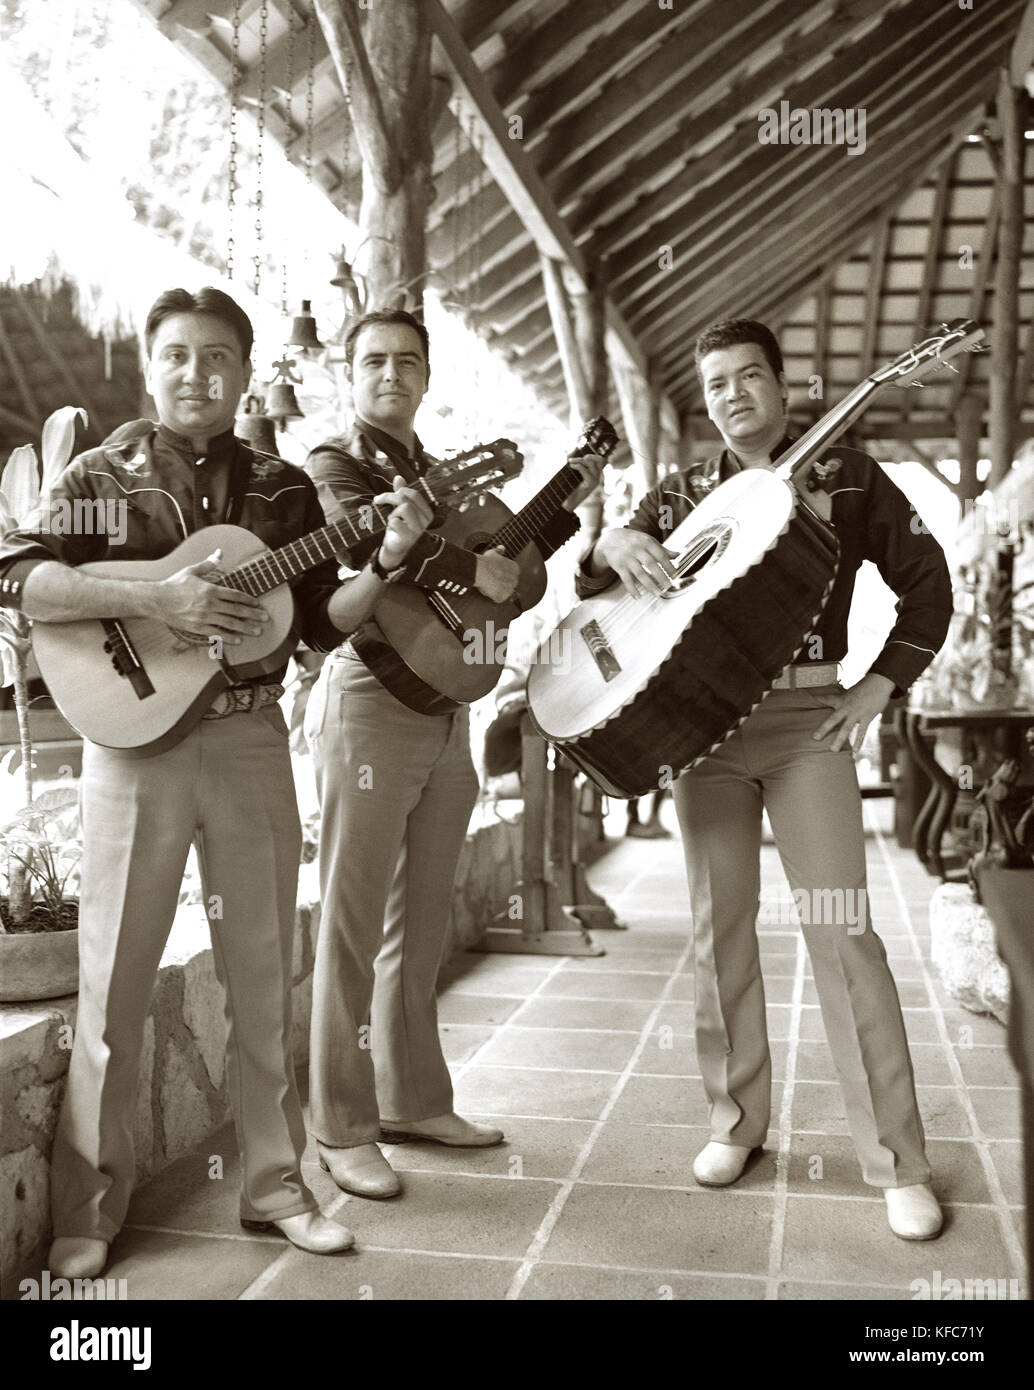 MEXICO, Maya Riviera, Mariachi band portrait (B&W) Stock Photo